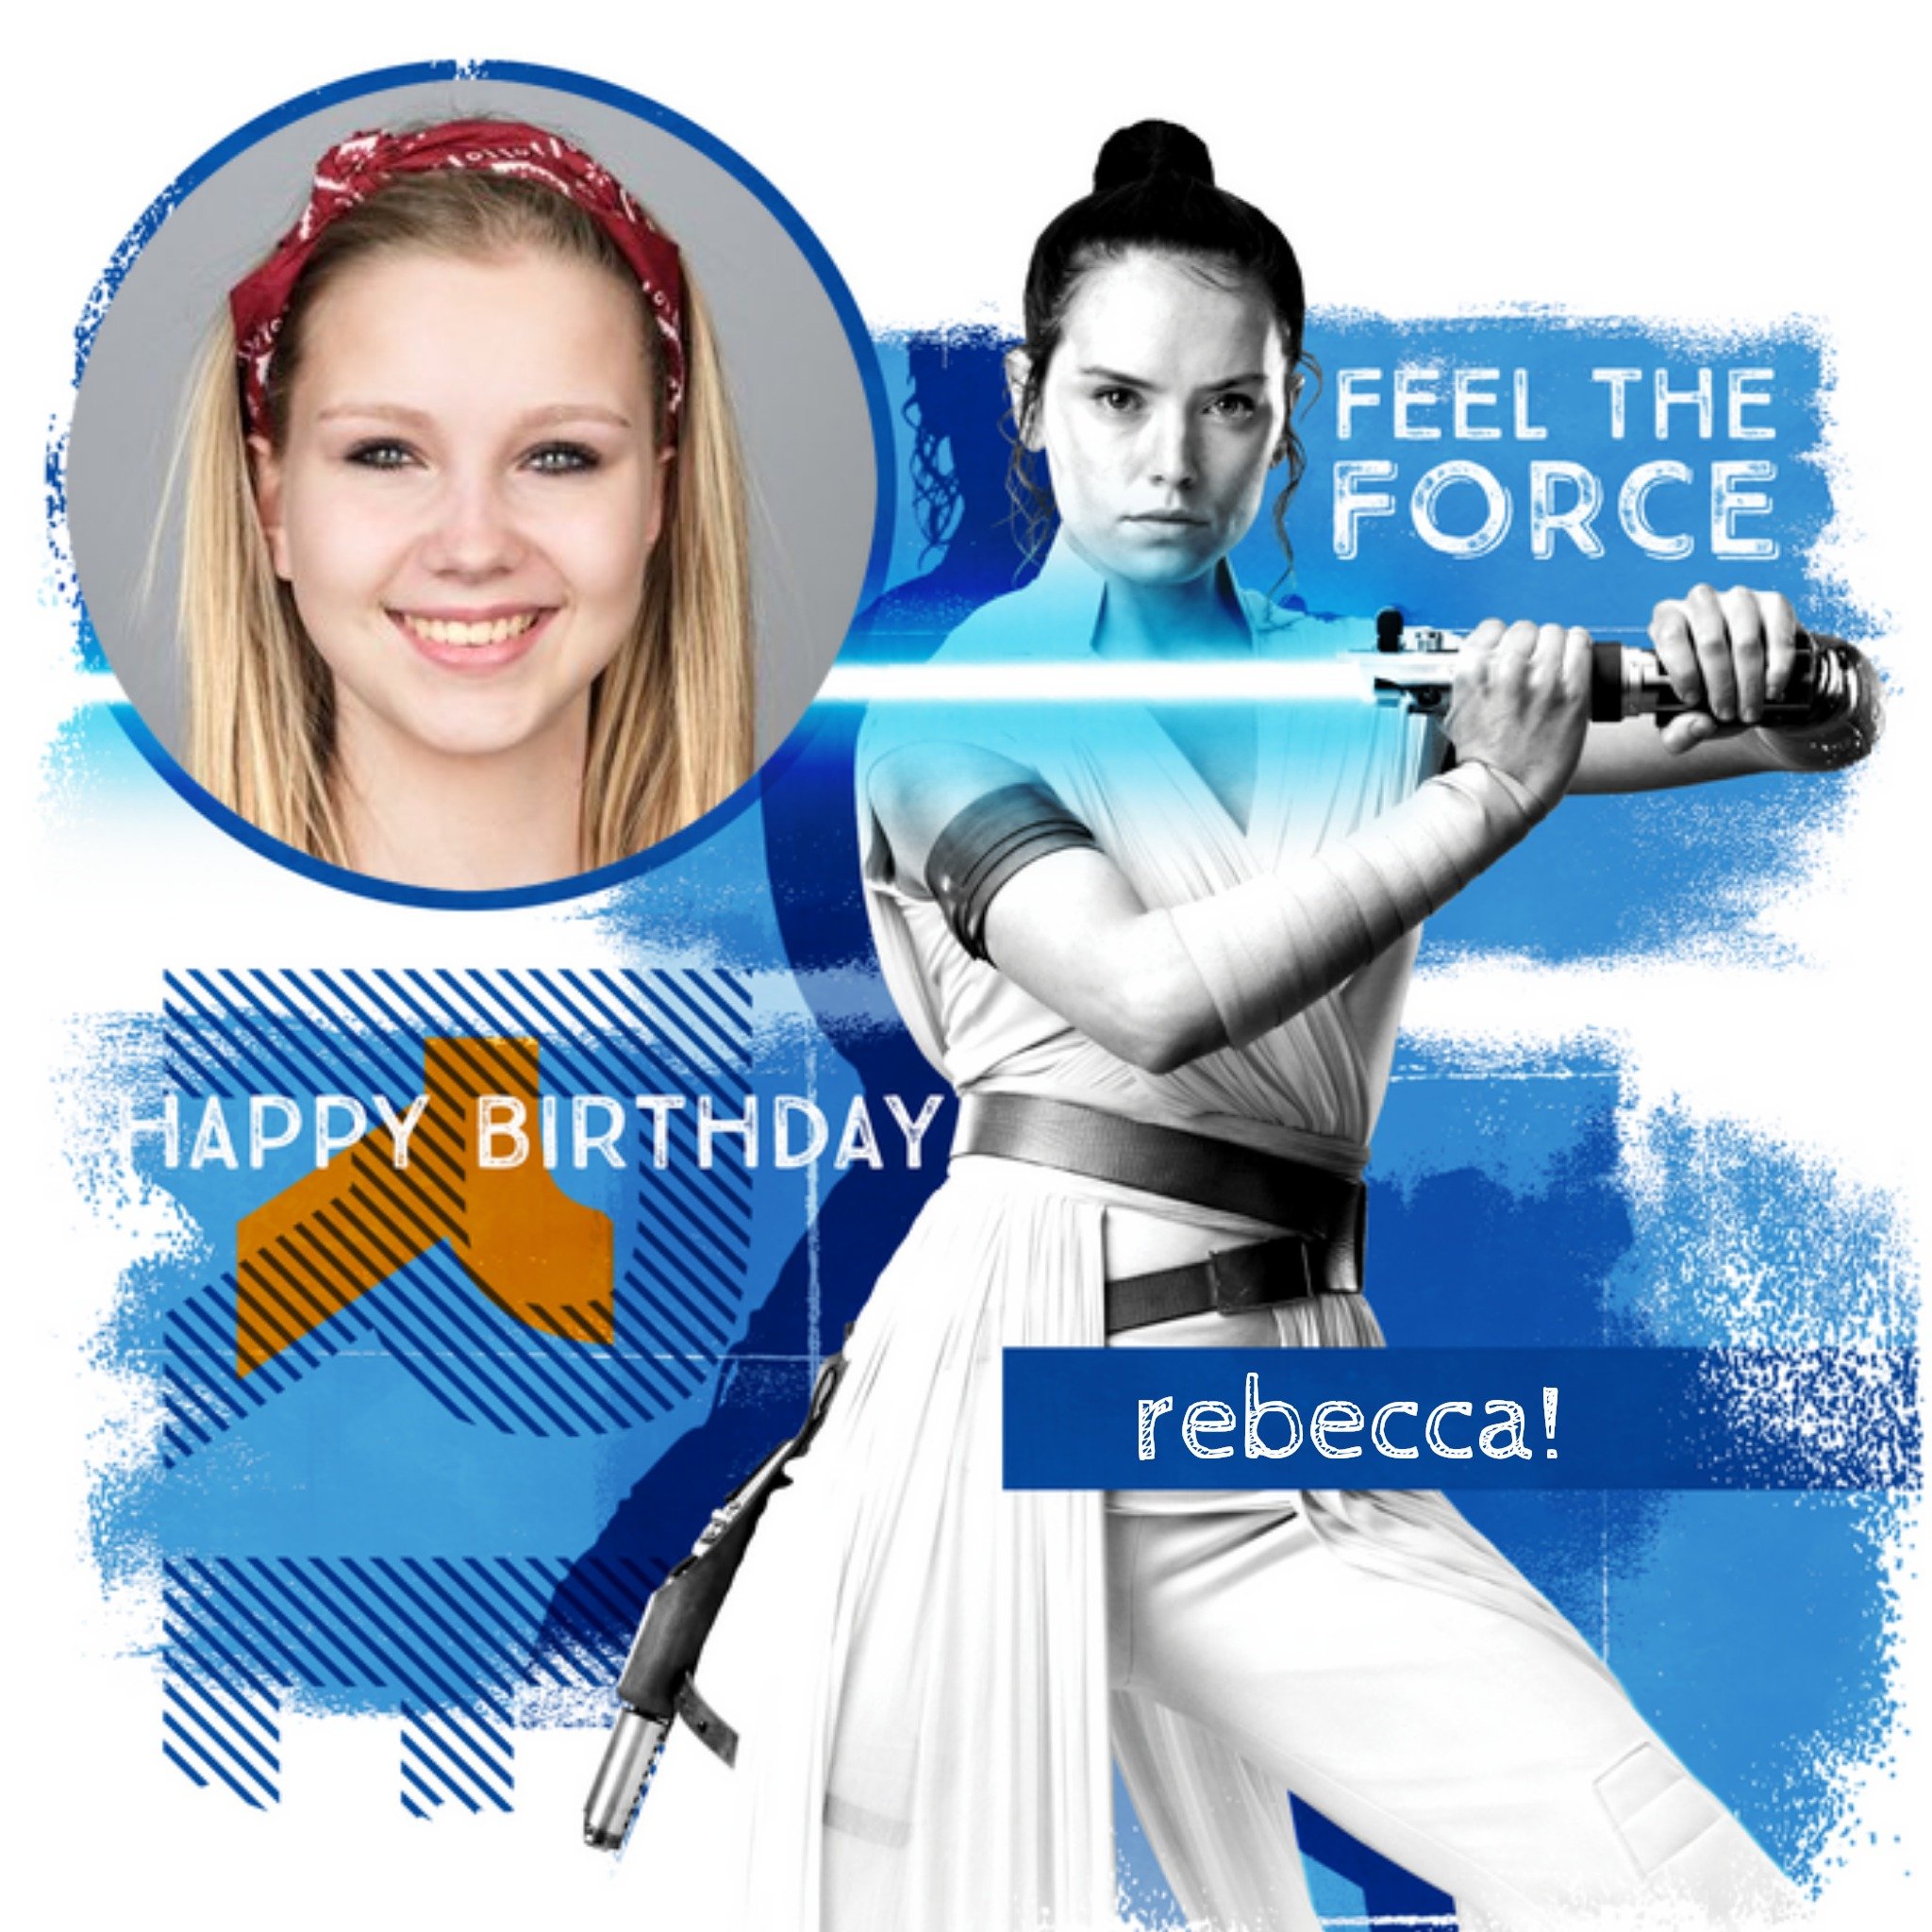 Disney Star Wars Episode 9 The Rise Of Skywalker Rey Personalised Photo Upload Birthday Card, Large